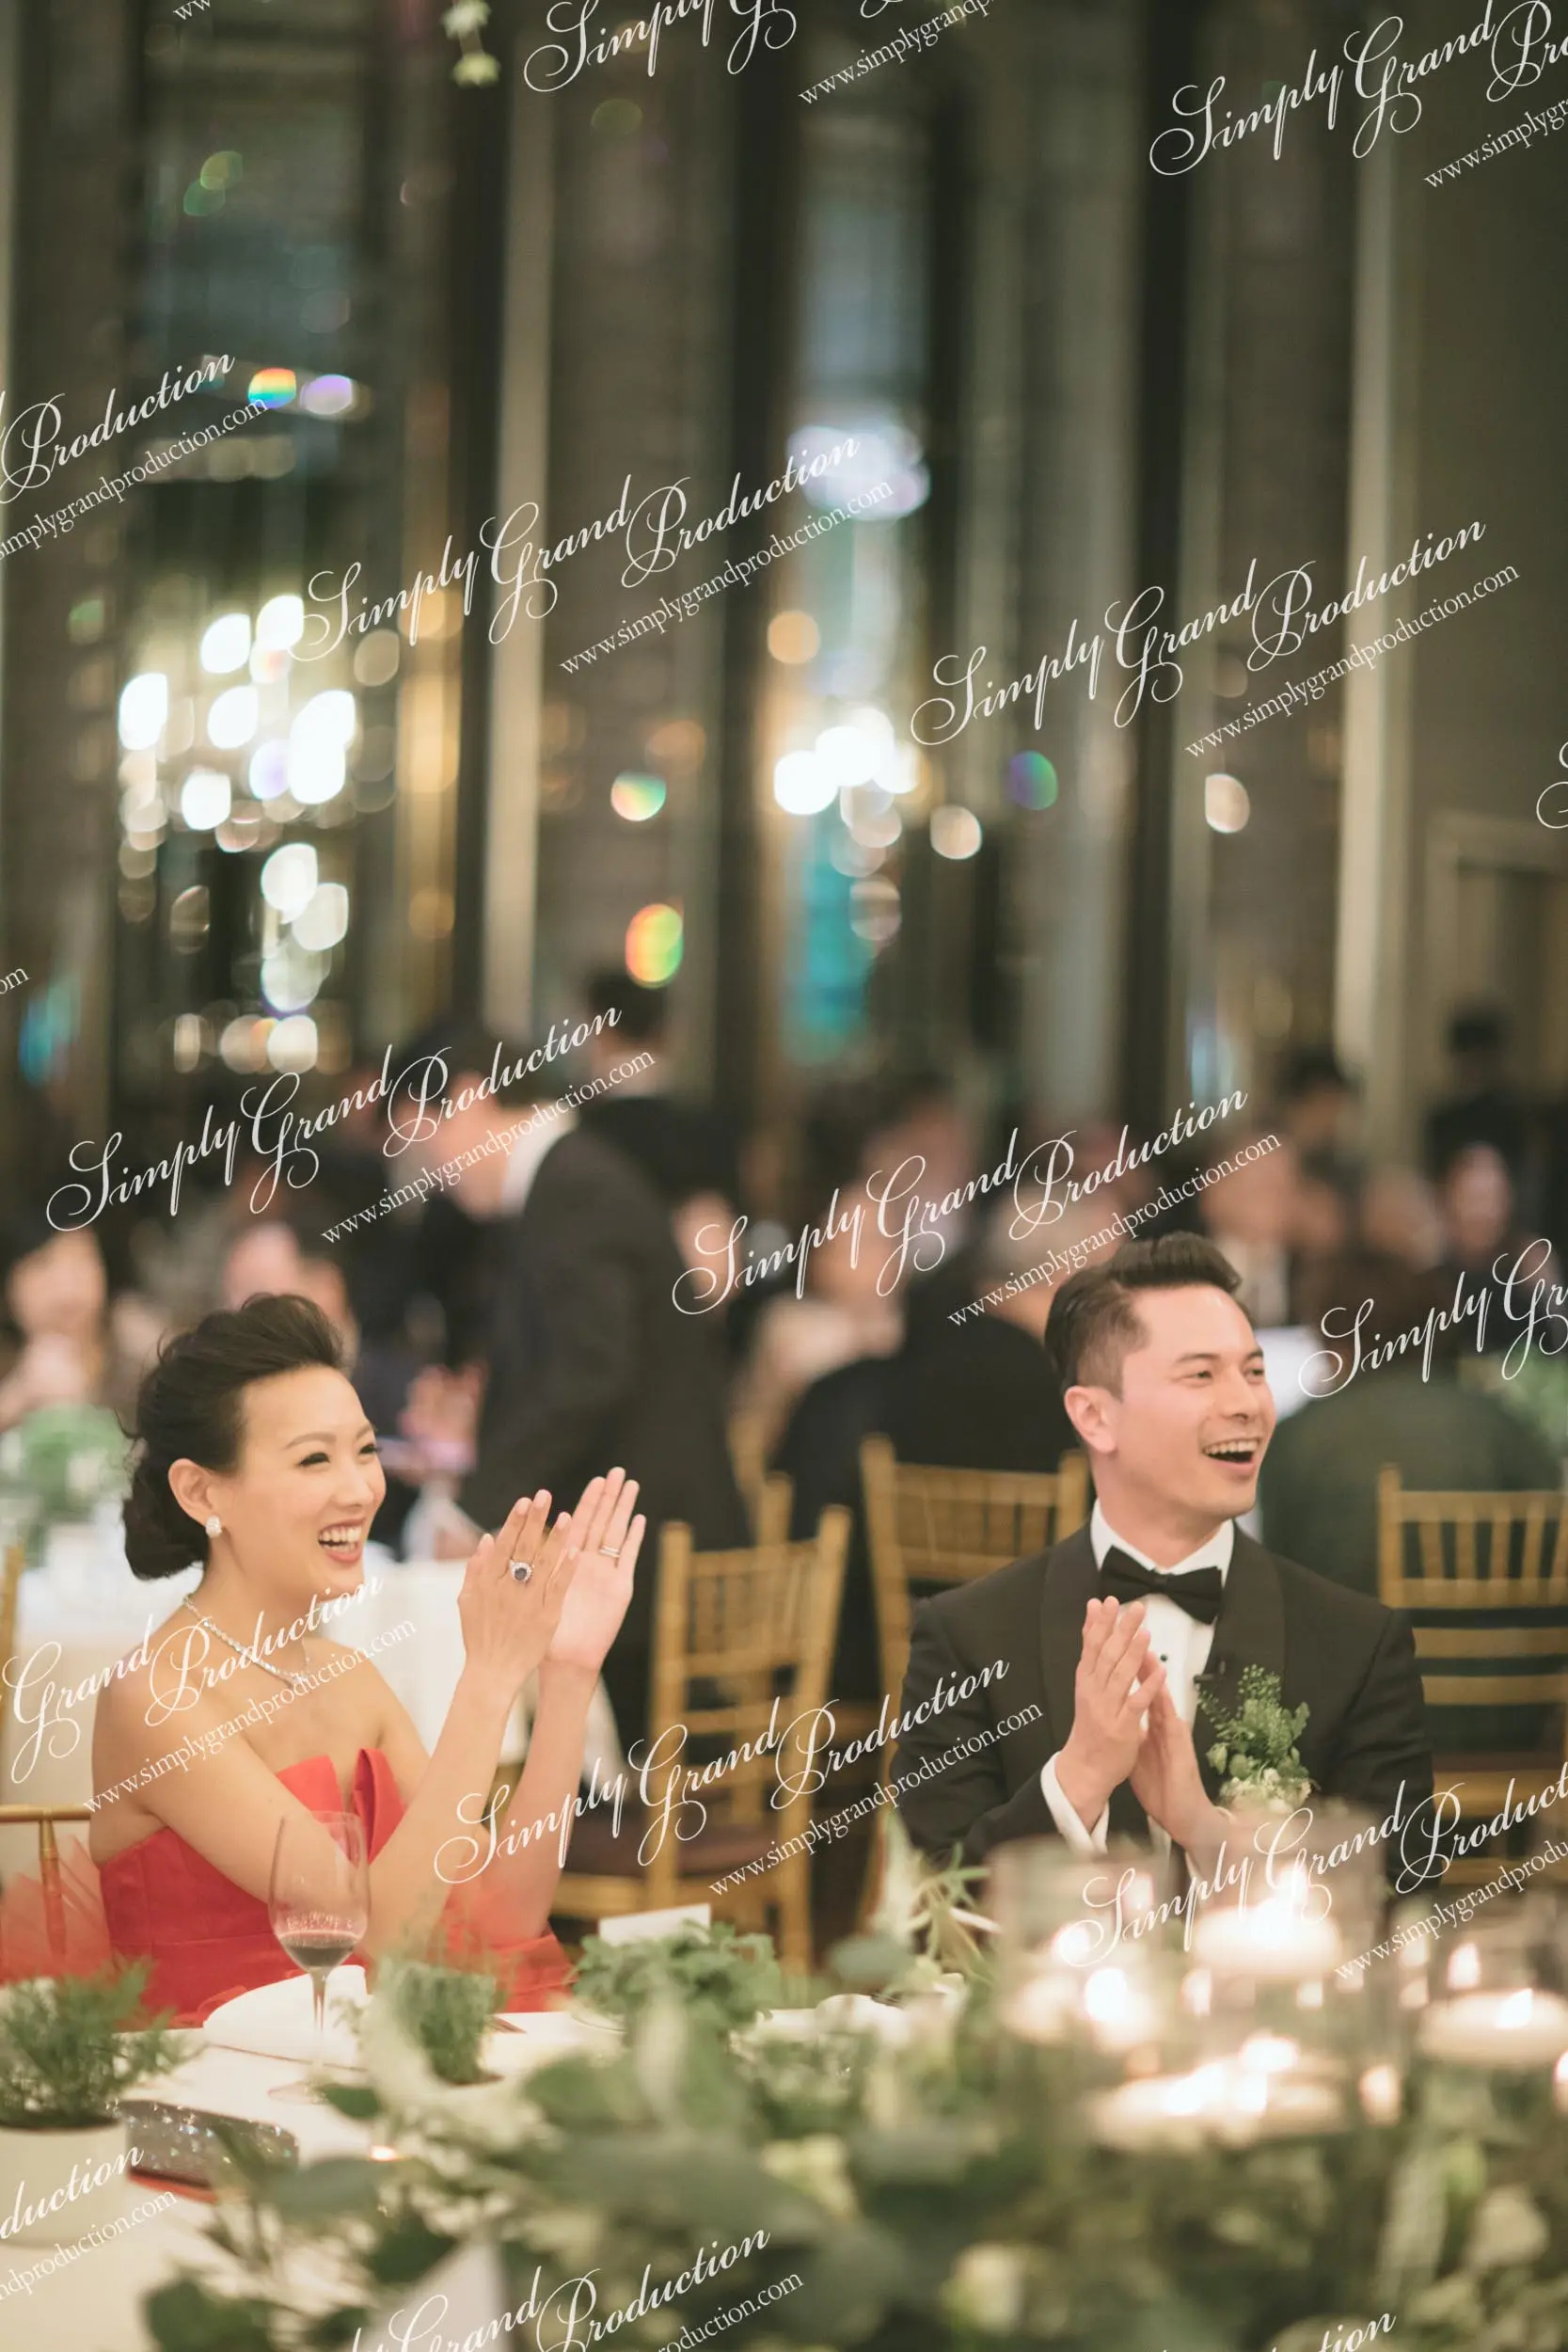 Simply_Grand_Production_Ballroom_wedding_decoration_newlywed_banquet_bride_groom_happiness_centerpiece_Grand_Hyatt_2_8_wm